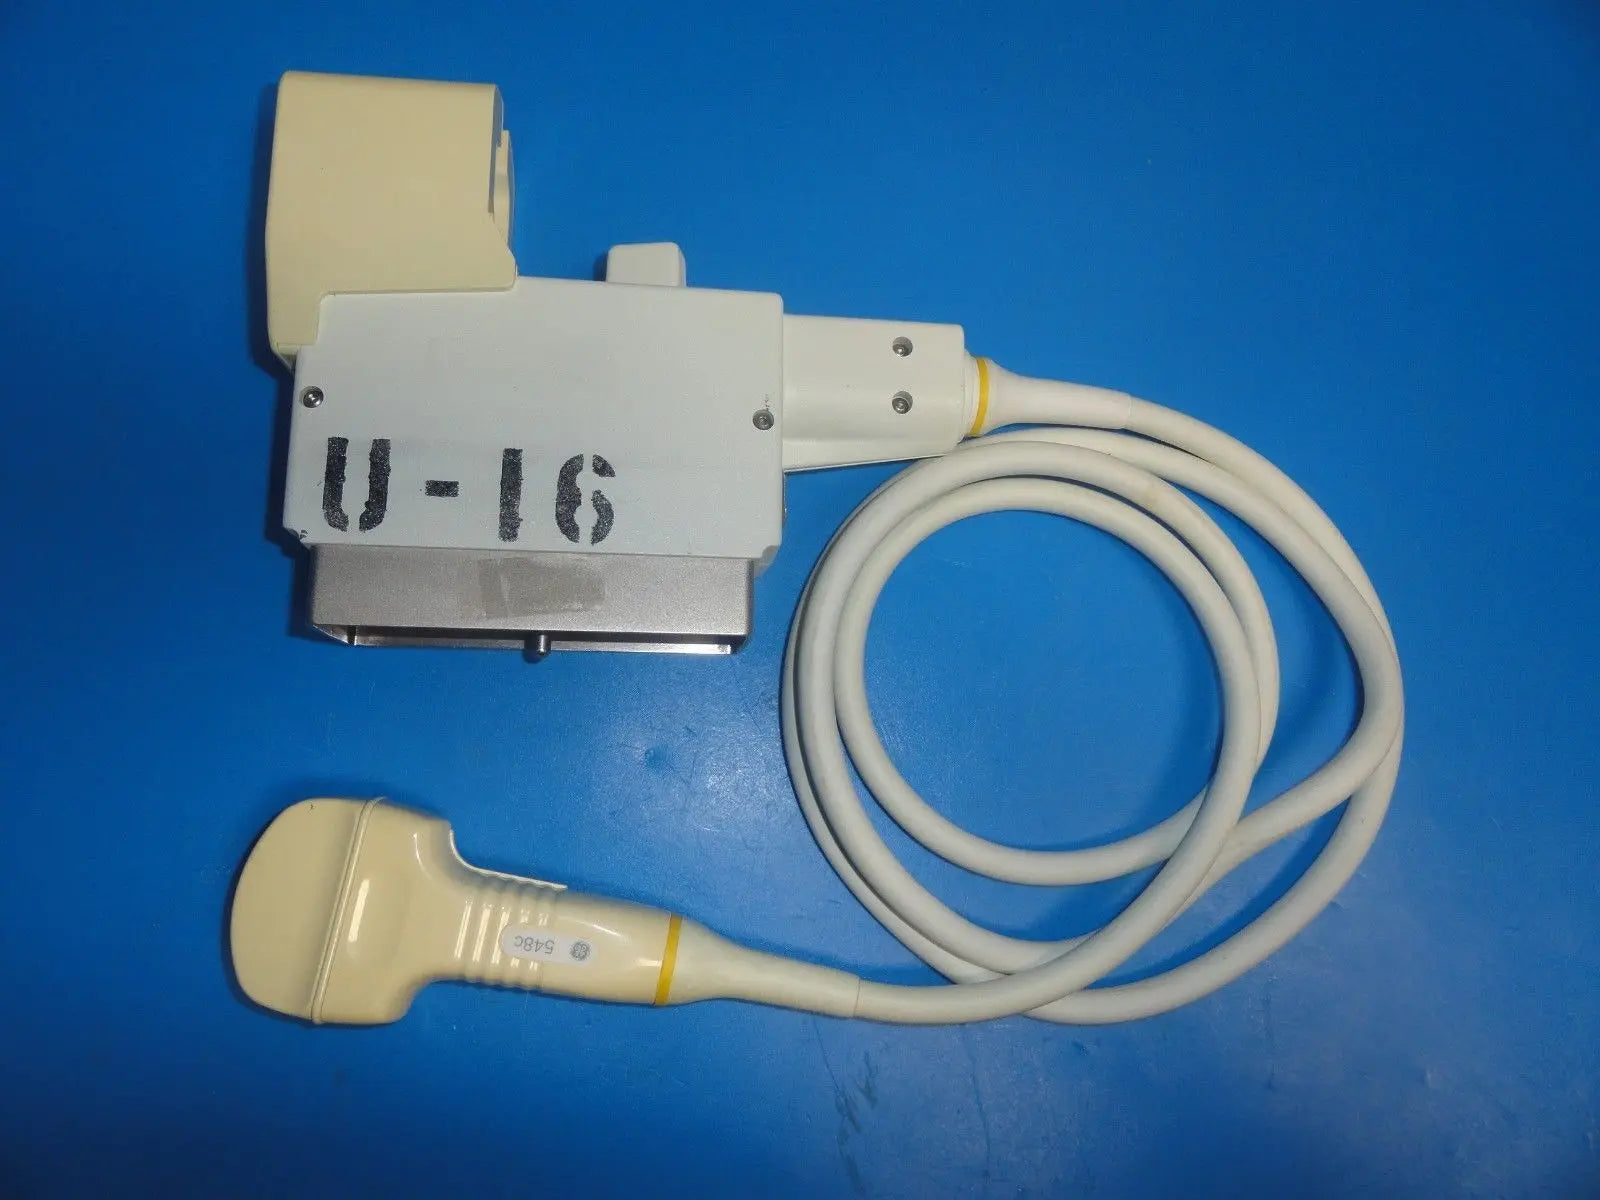 GE 548c Ref 2111713 3-5 / D 3 MHz Convex Abdominal Ultrasound Transducer (6054) DIAGNOSTIC ULTRASOUND MACHINES FOR SALE